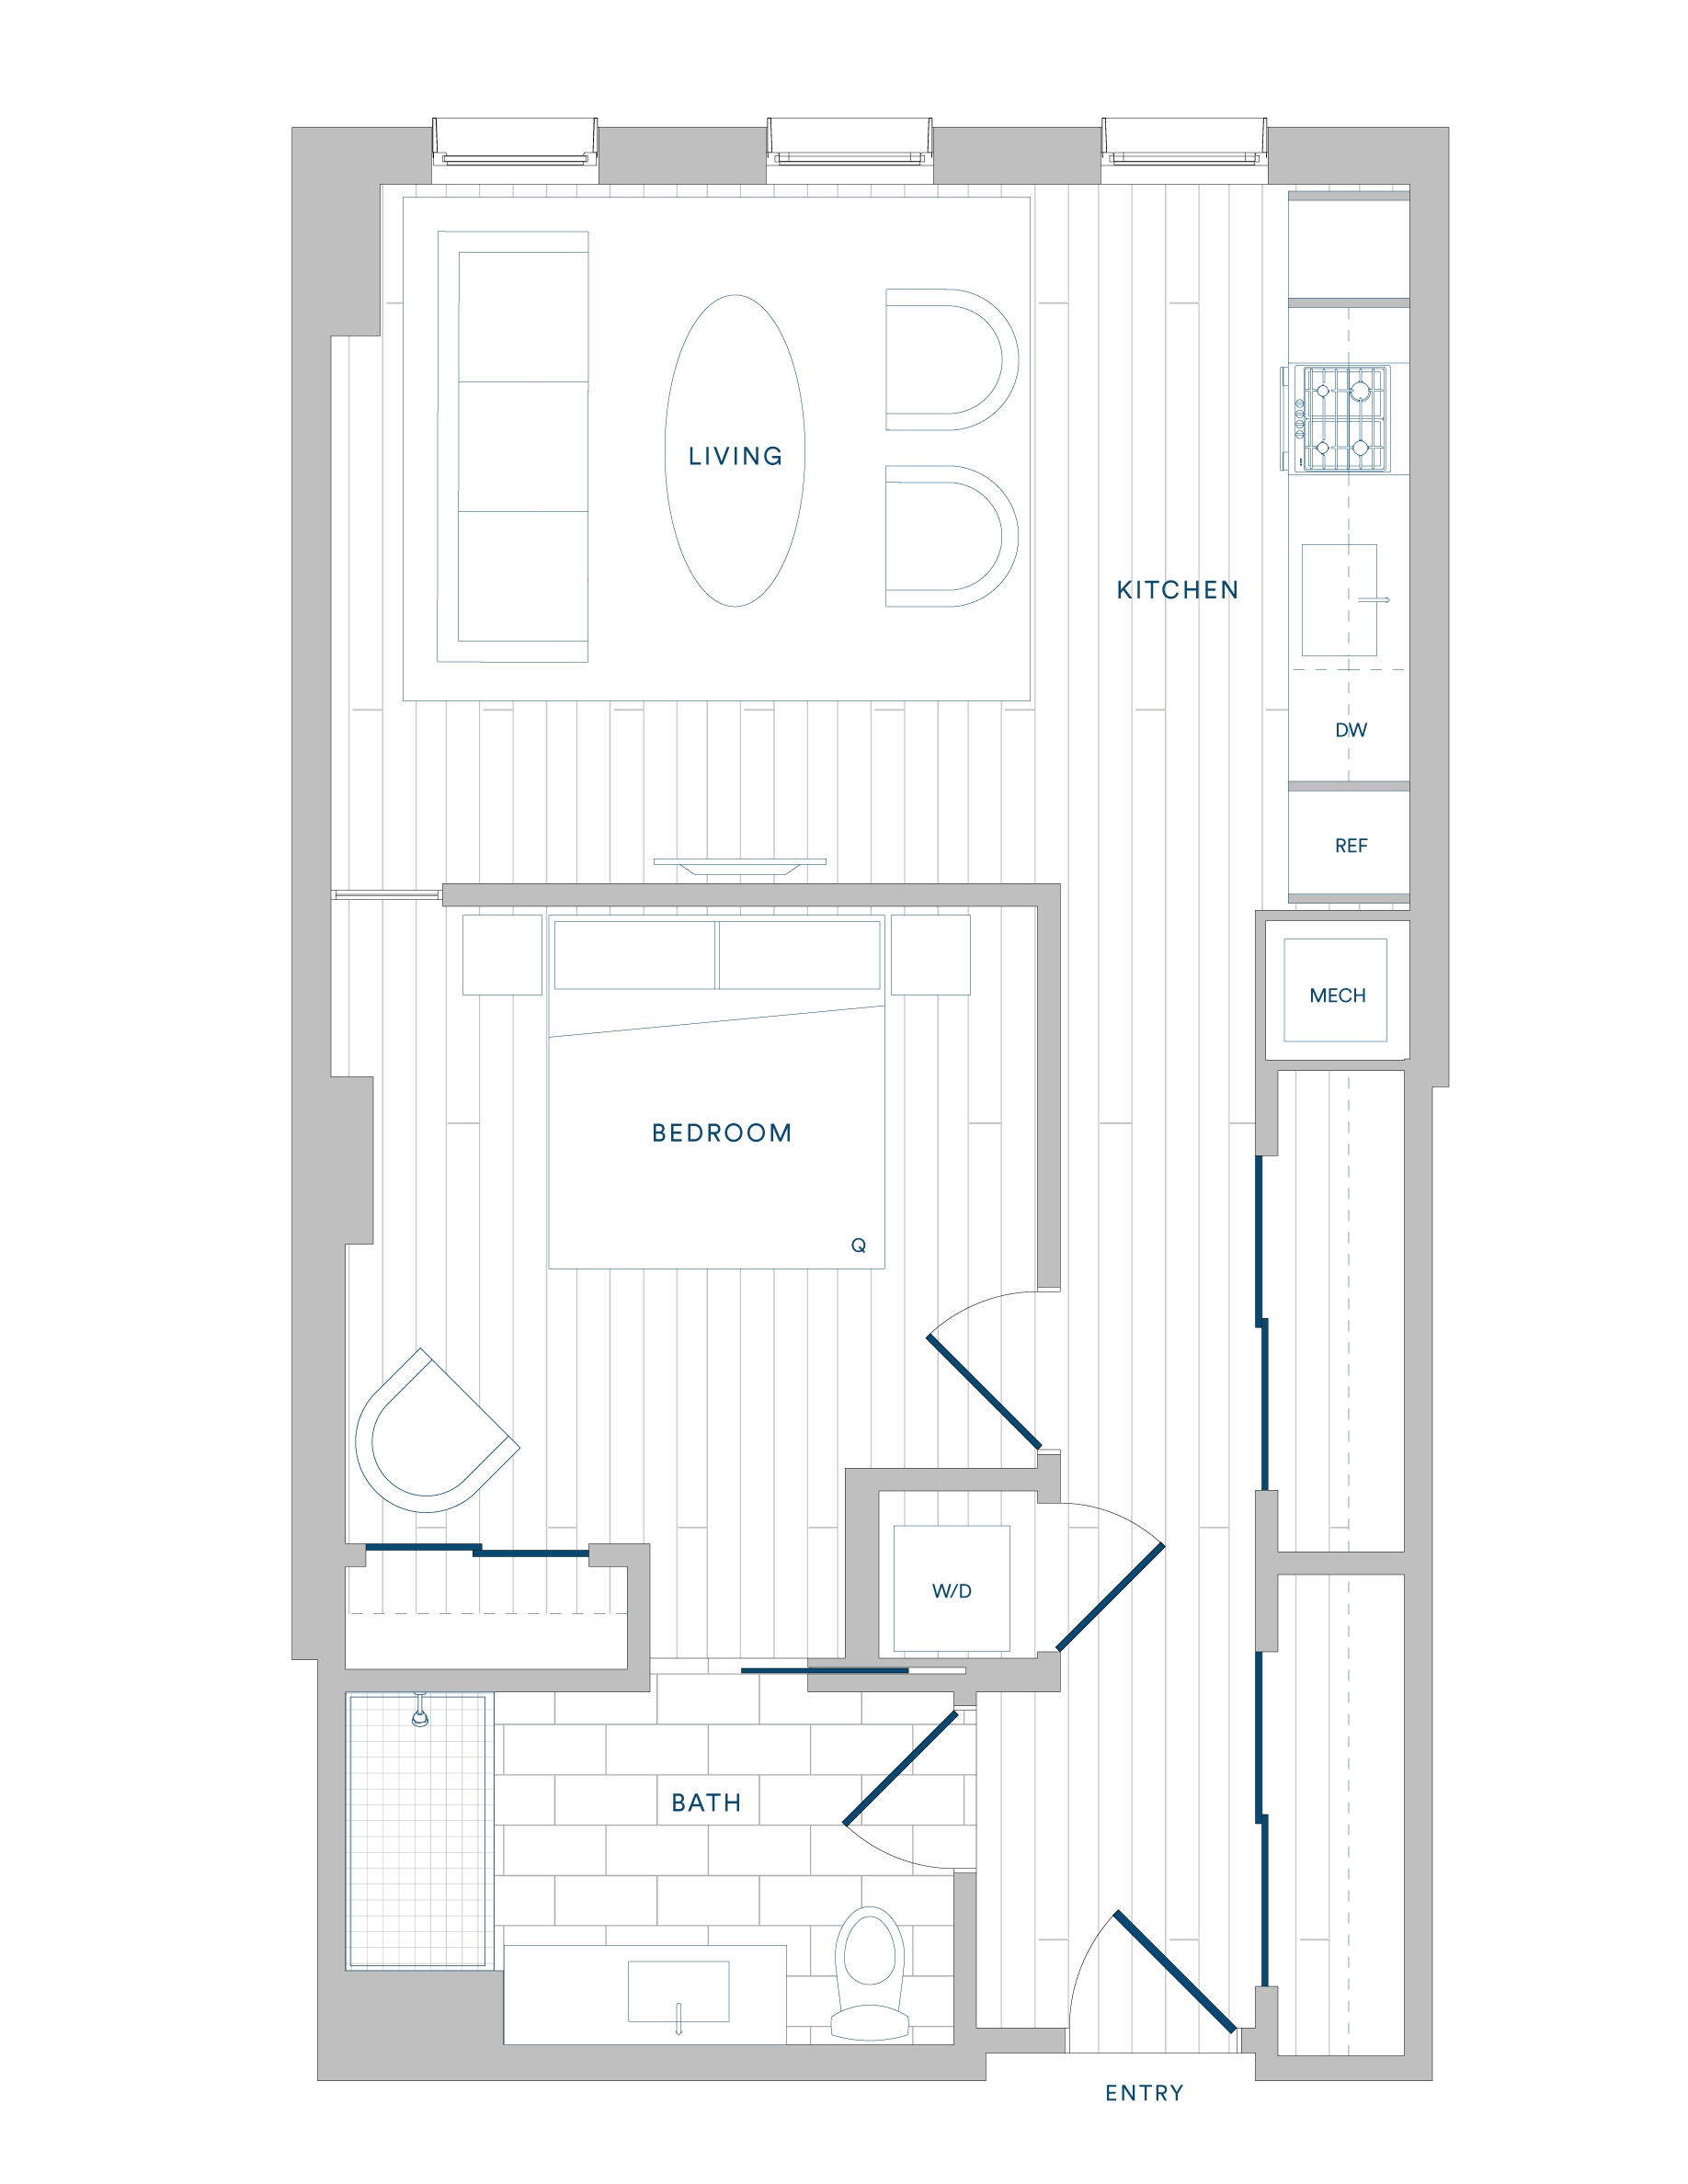 Floorplan for Apartment #204, 1 bedroom unit at Margarite